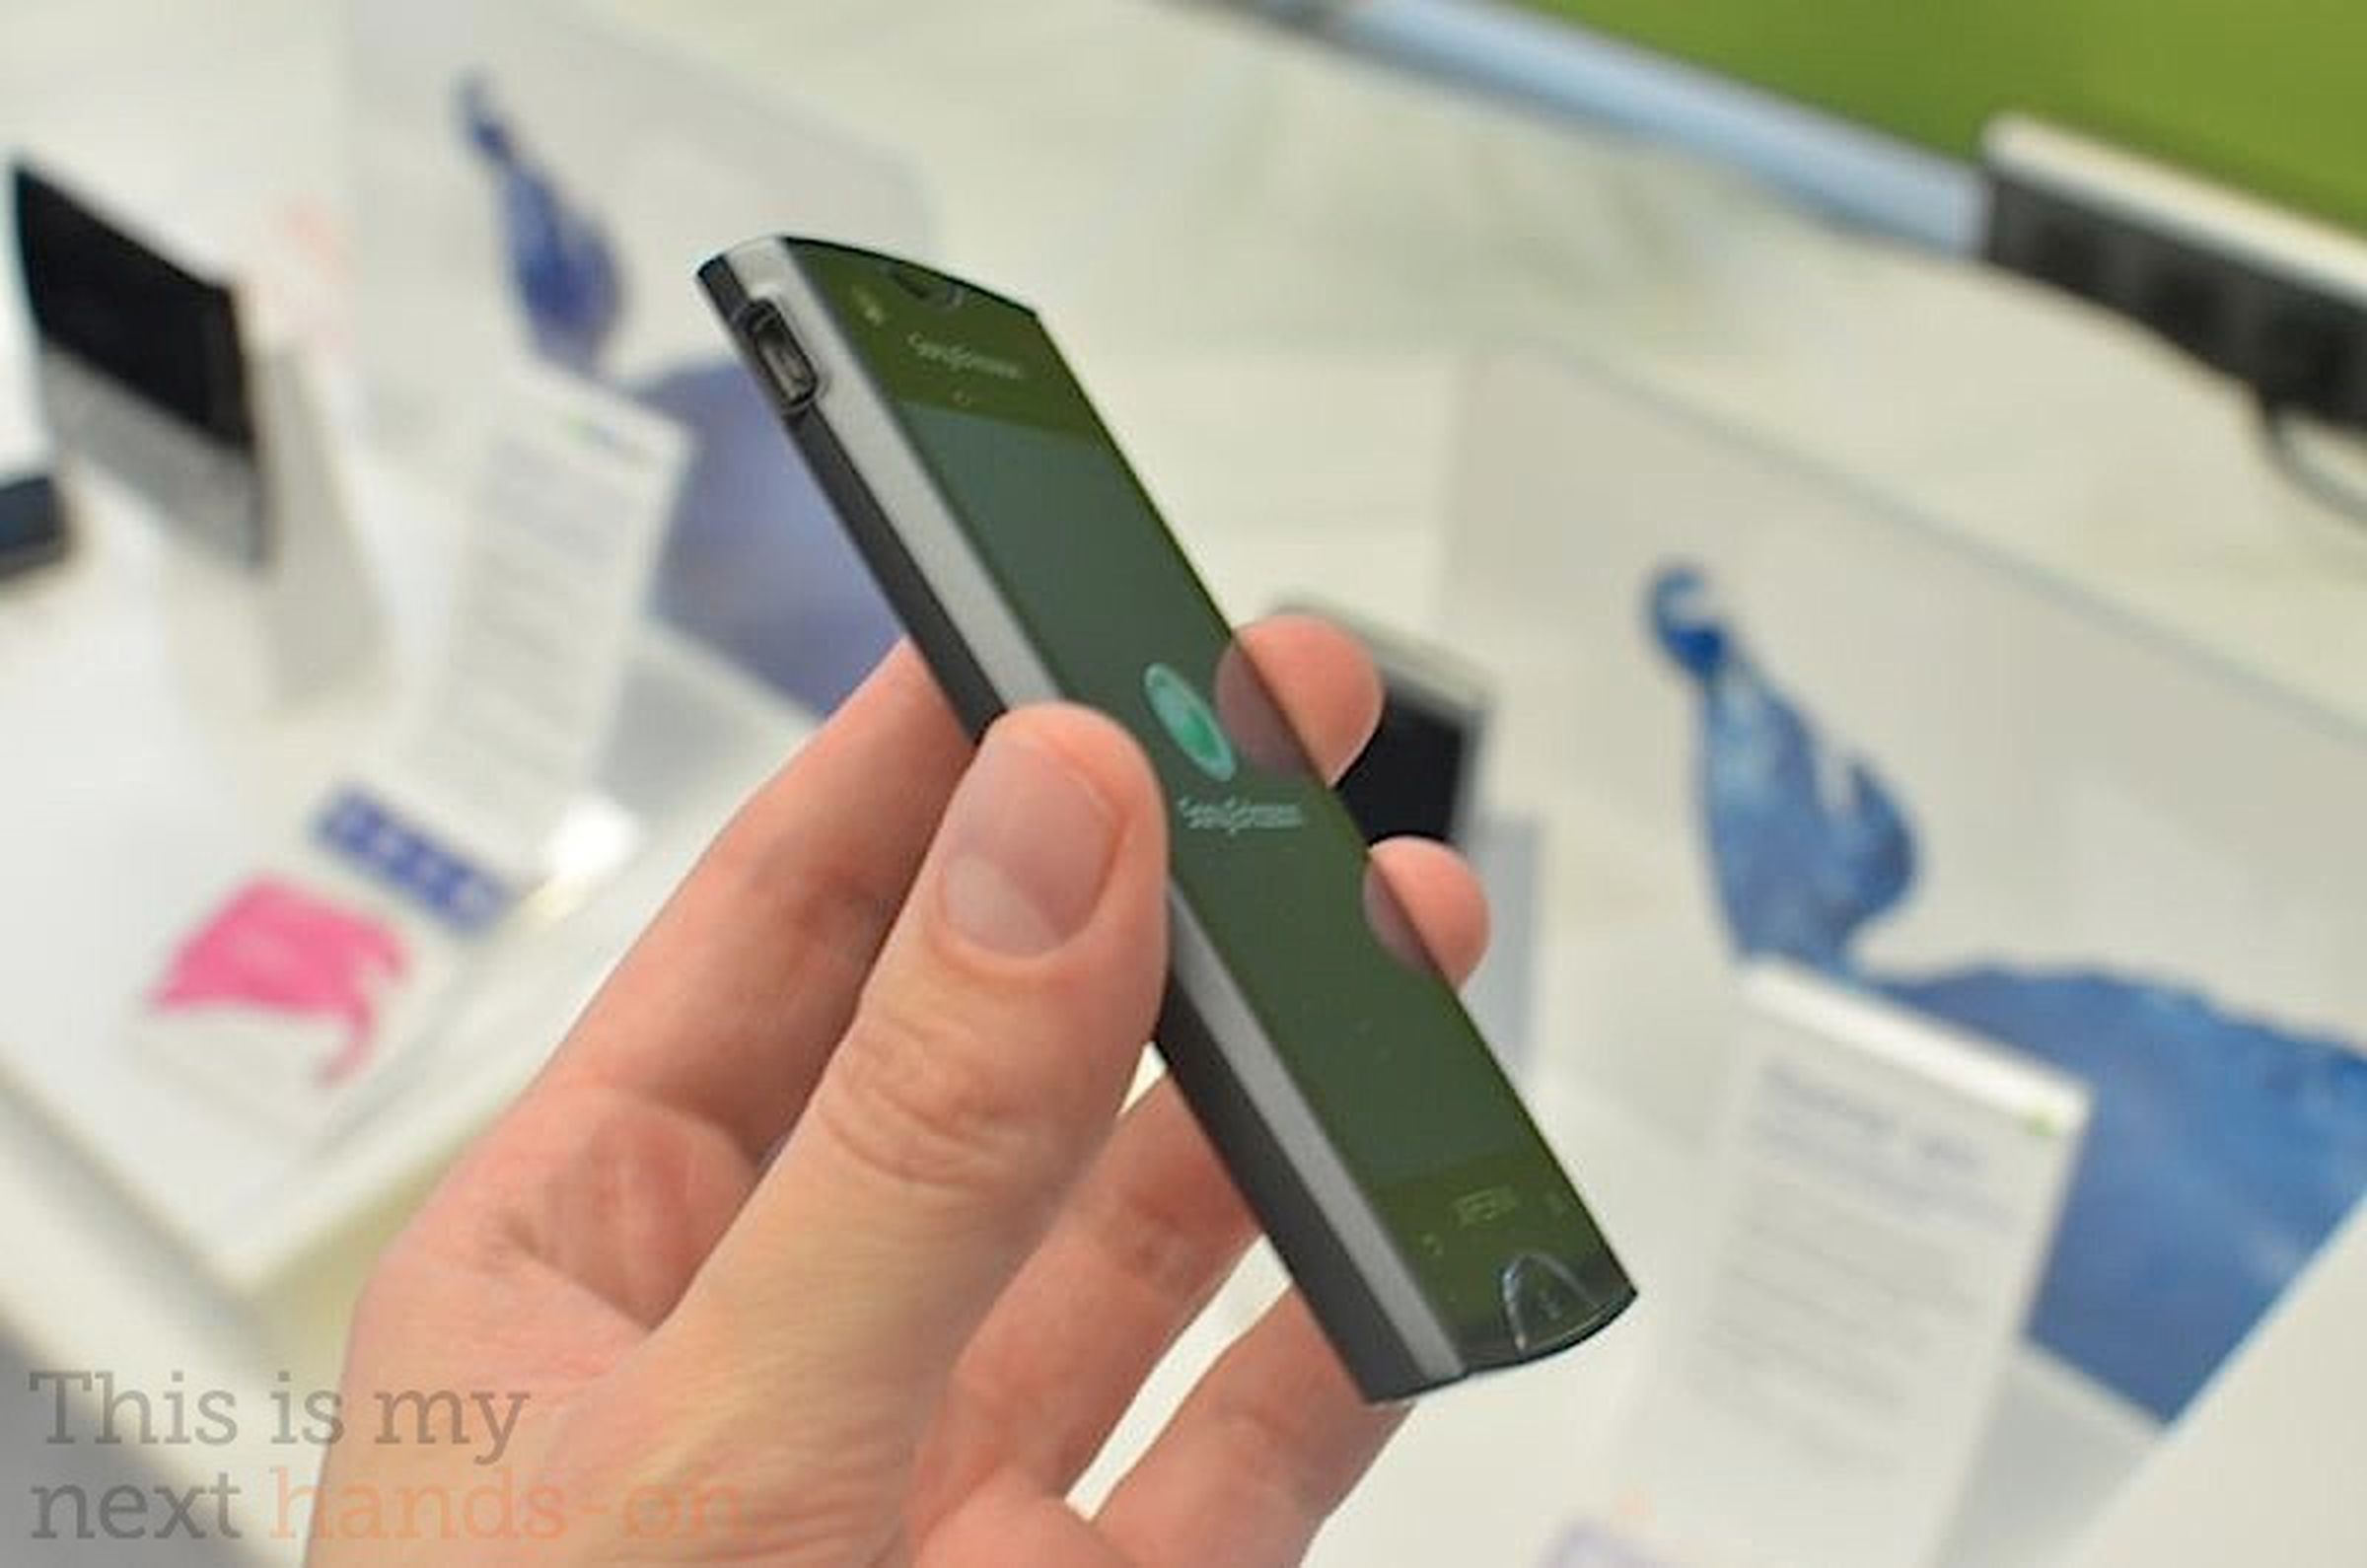 Sony Ericsson Xperia Ray hands on photos